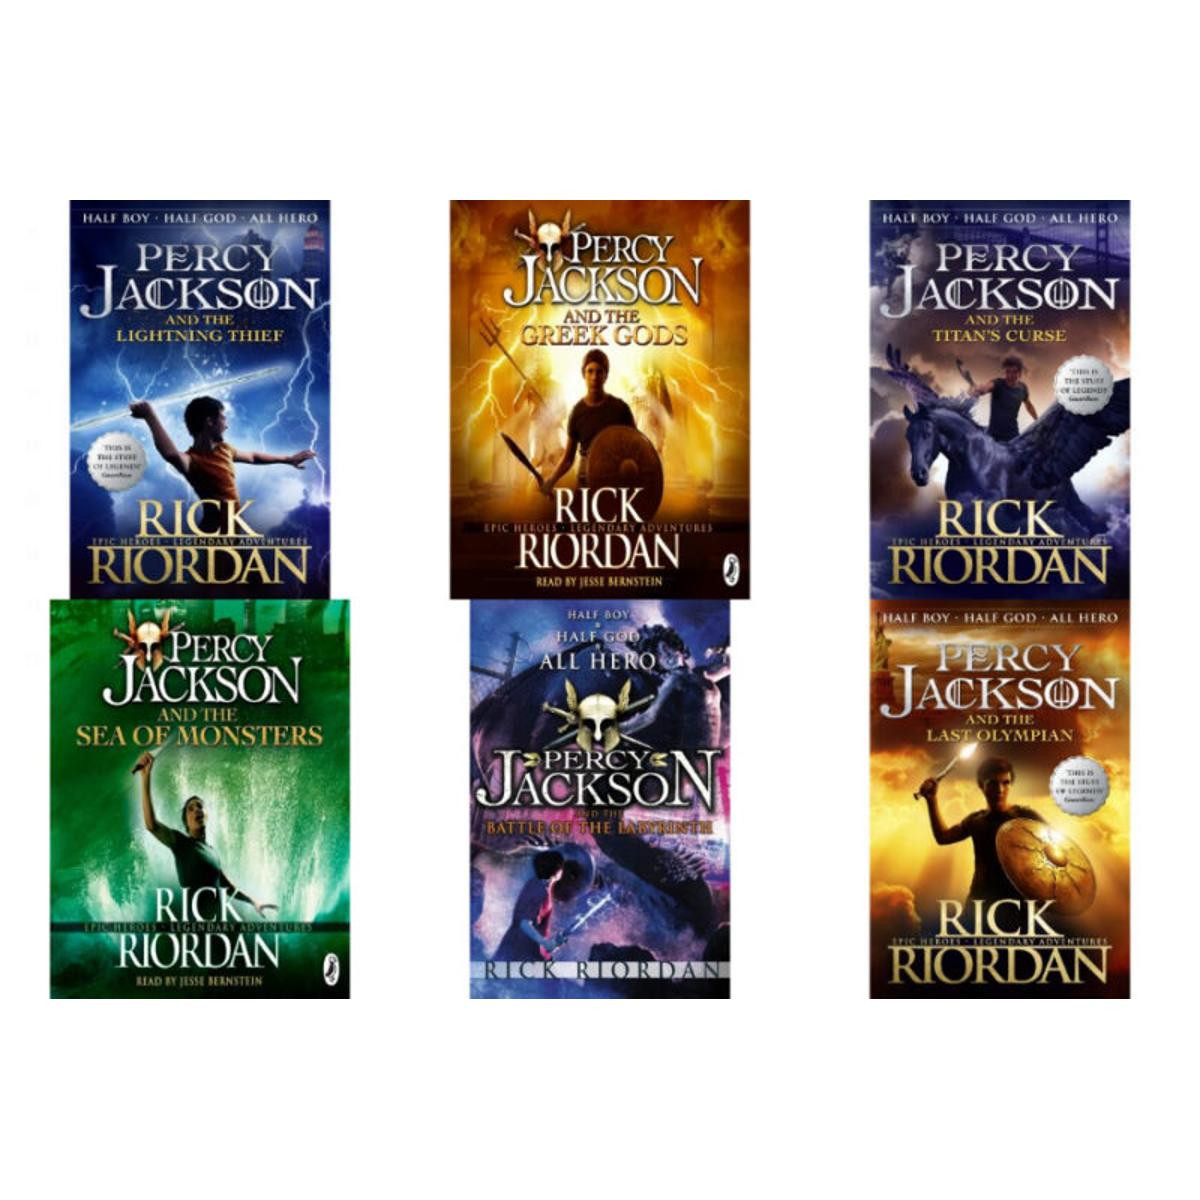 Harry Potter Series 1 - 8 books set by JK Rowling